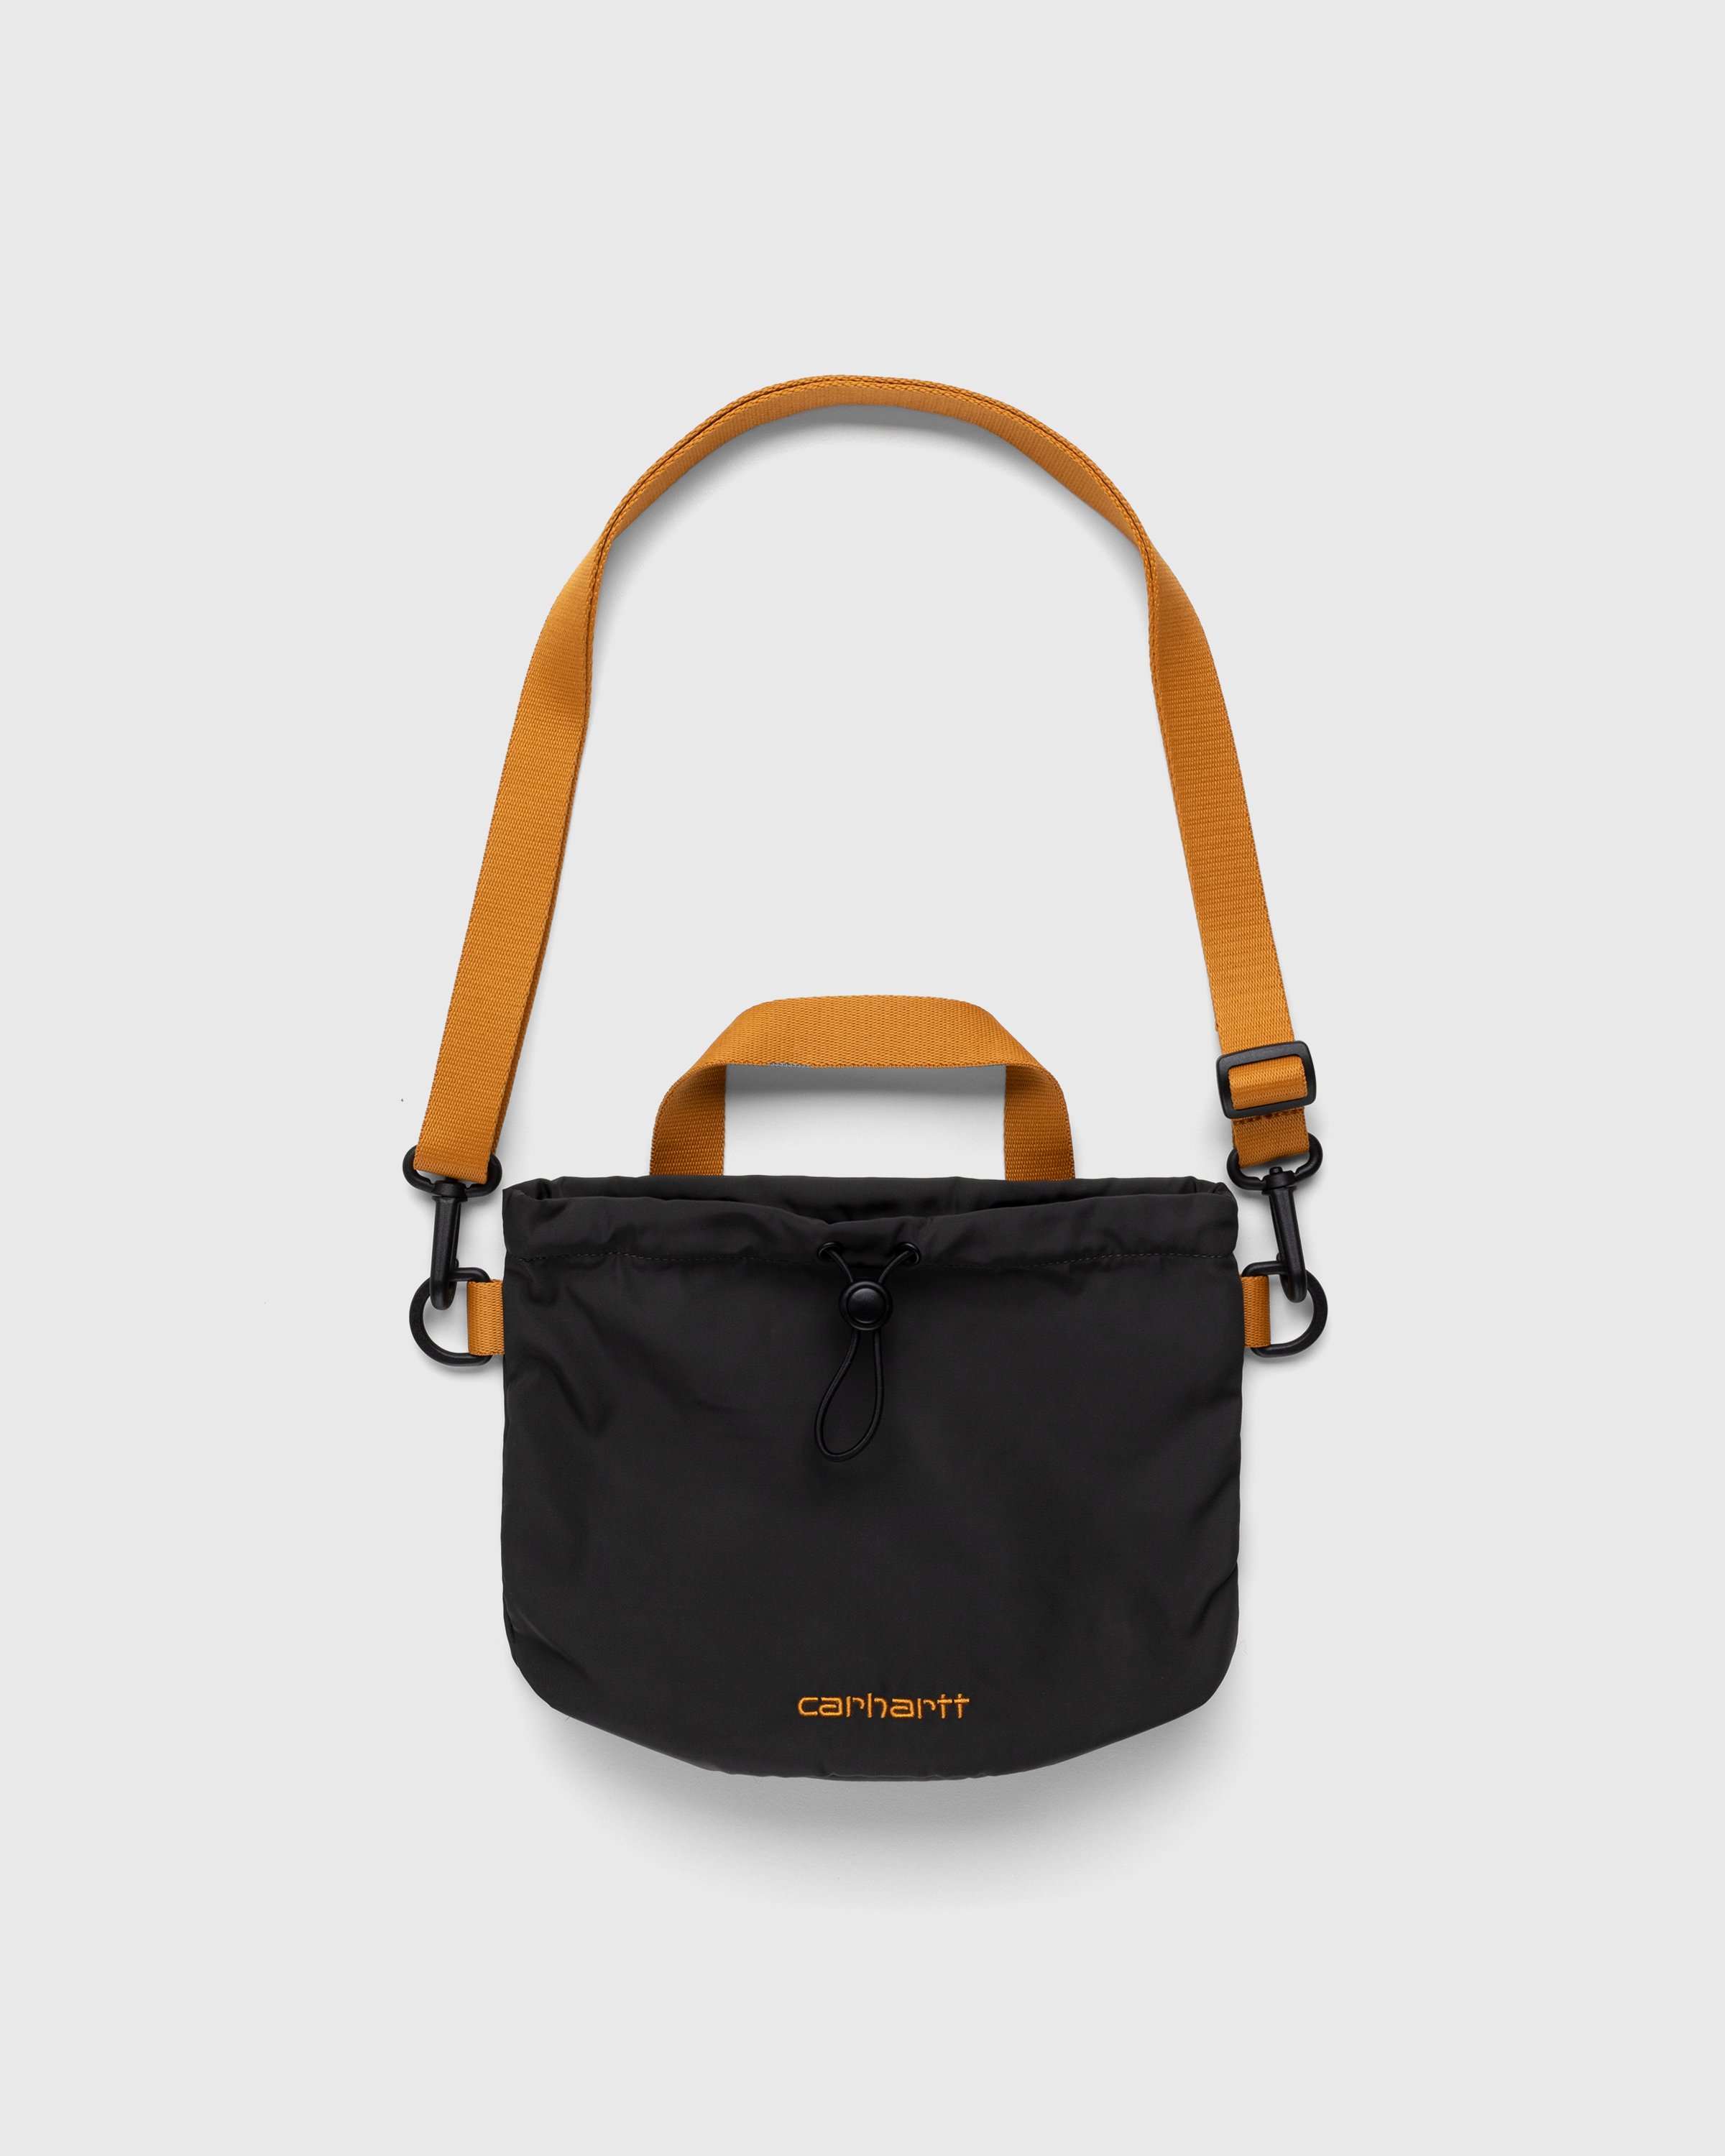 Carhartt WIP - Bayshore Small Bag Vulcan - Accessories - Black - Image 1